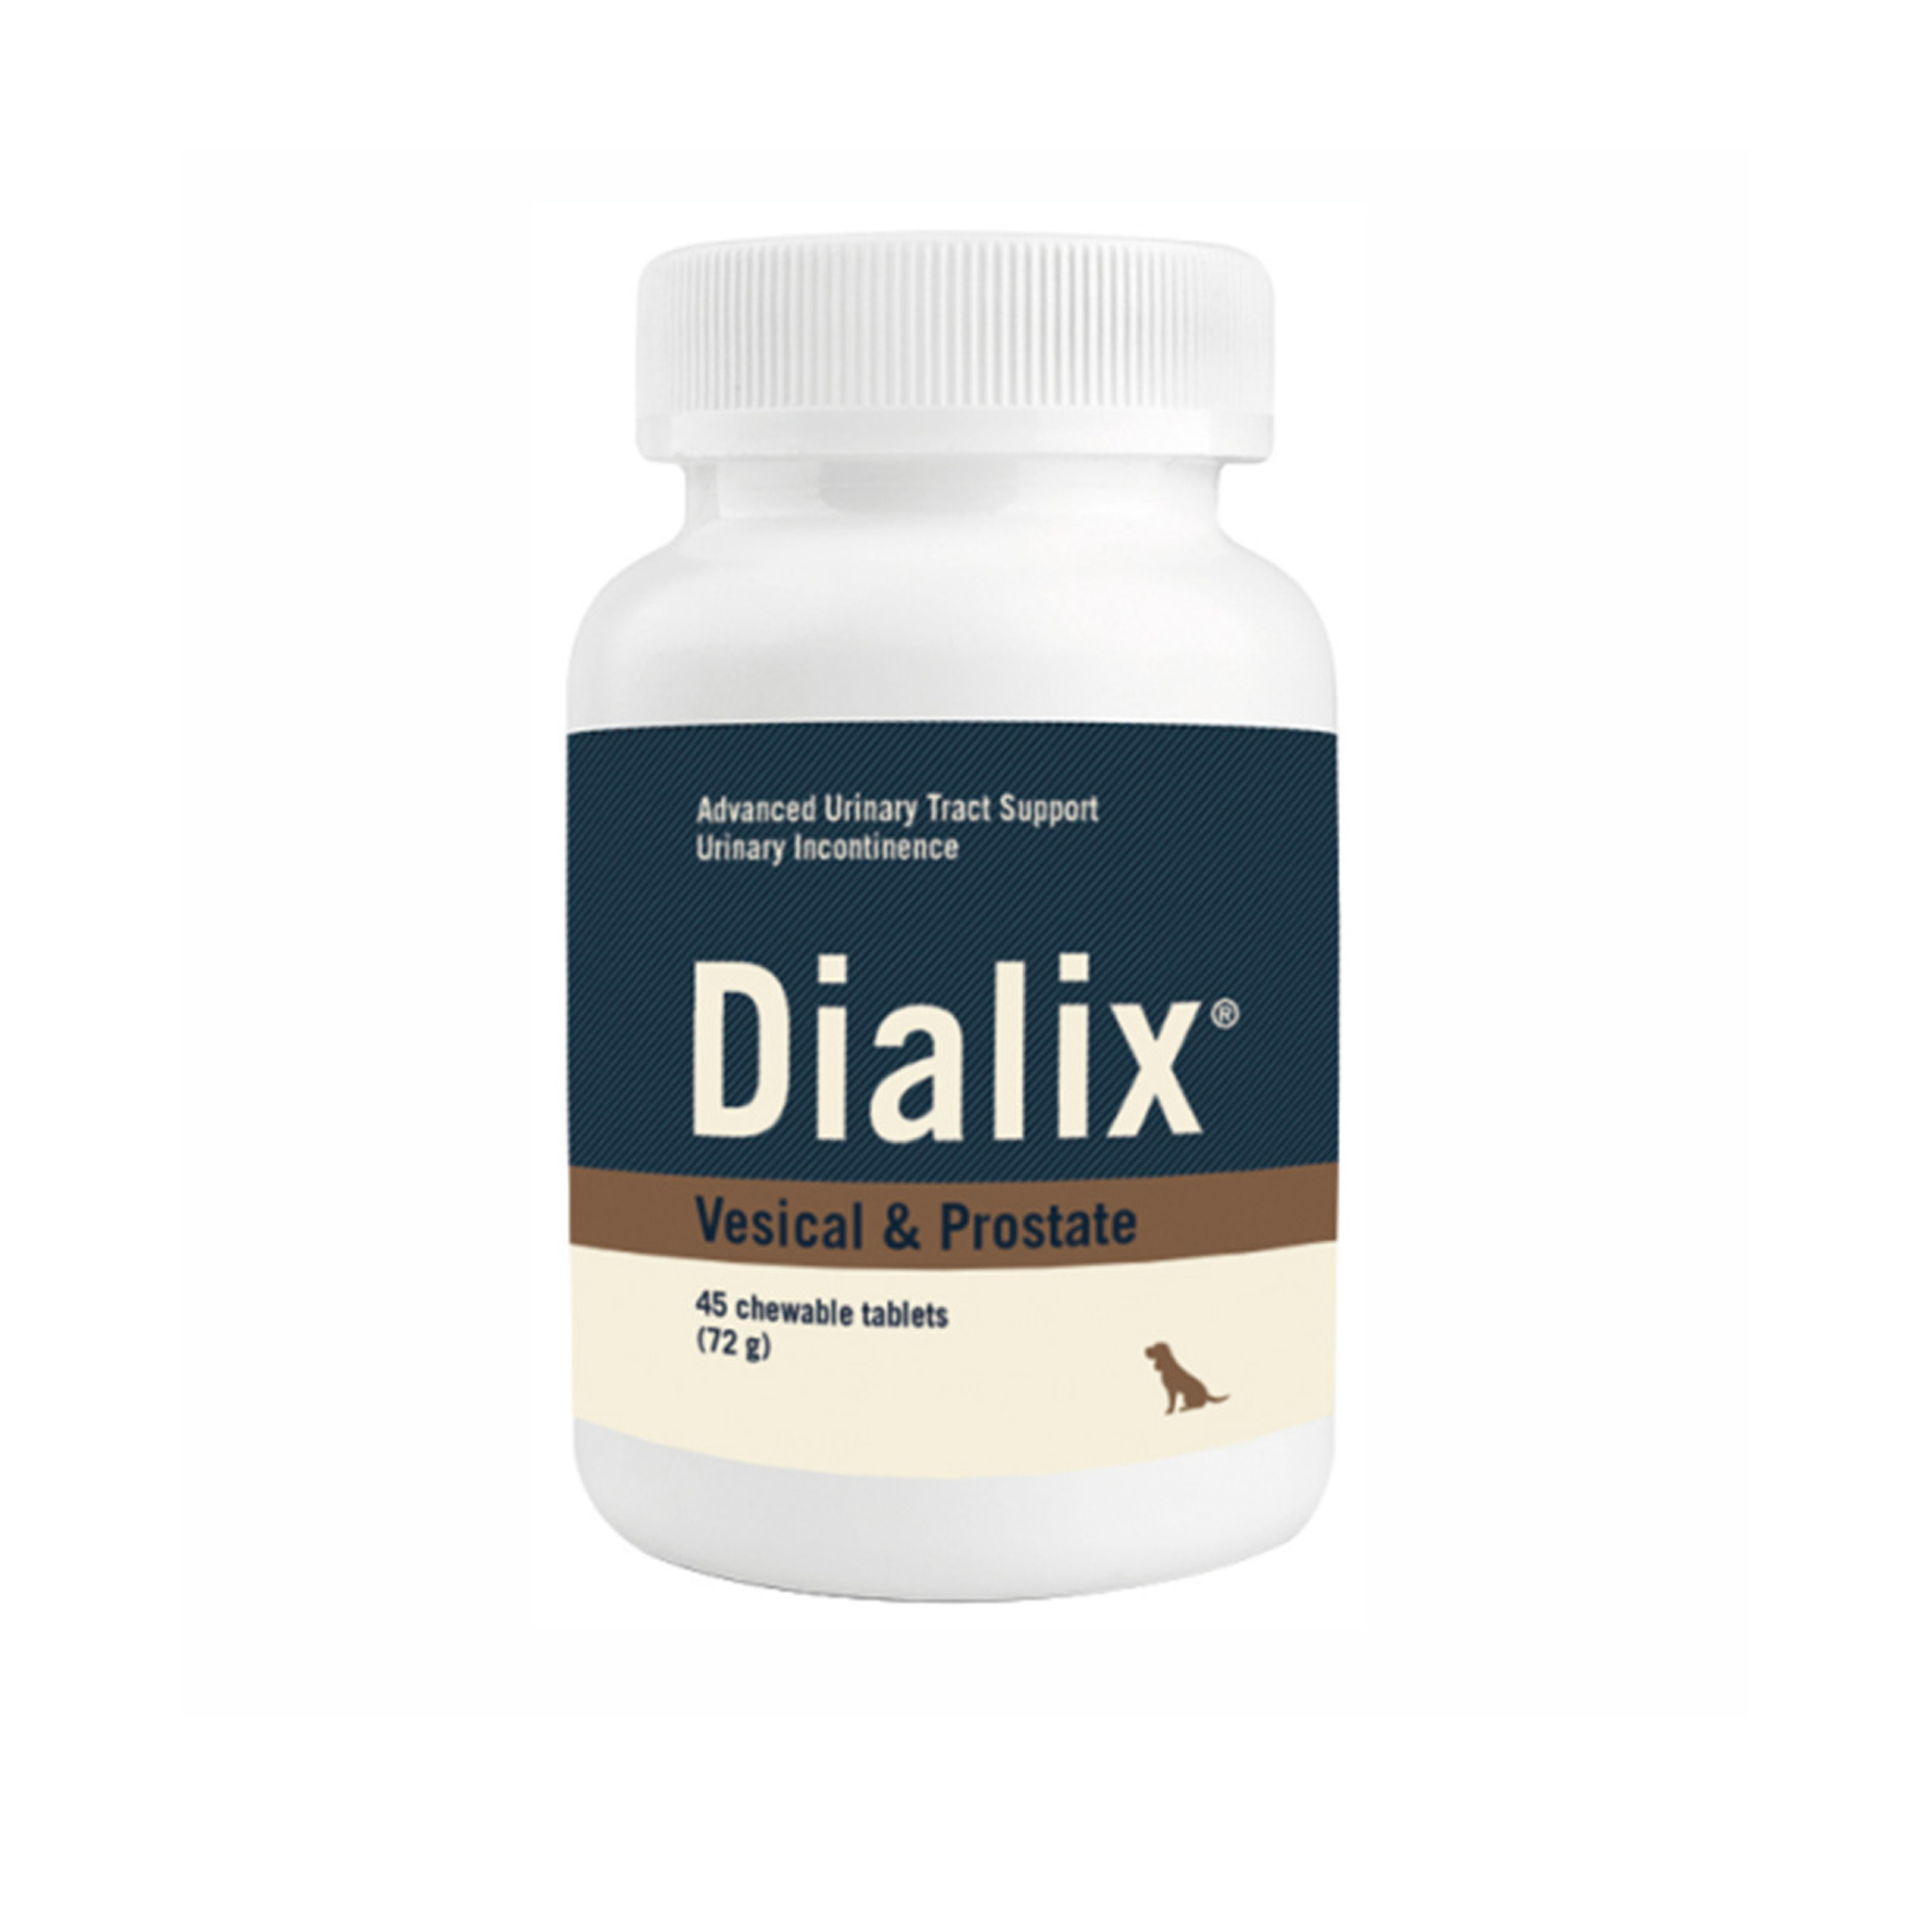 DIALIX® Vesical & Prostate